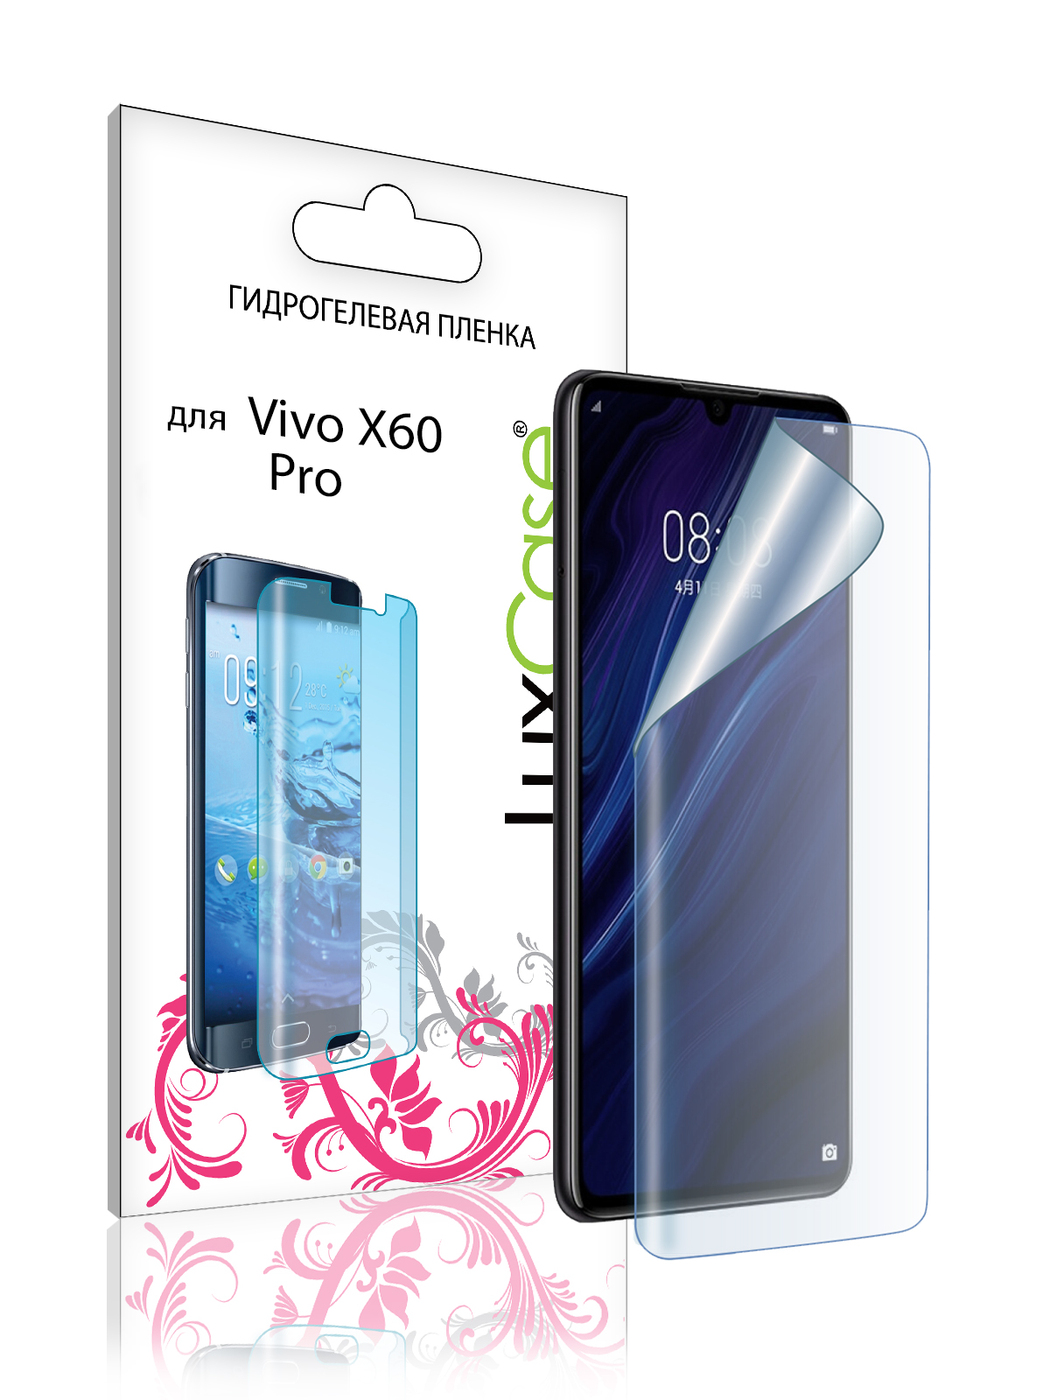 Пленка гидрогелевая LuxCase для Vivo X60 Pro Front 0.14mm Transparent 86001 2 шт гидрогелевая пленка с вырезом под камеру для виво х70 про vivo x70 pro